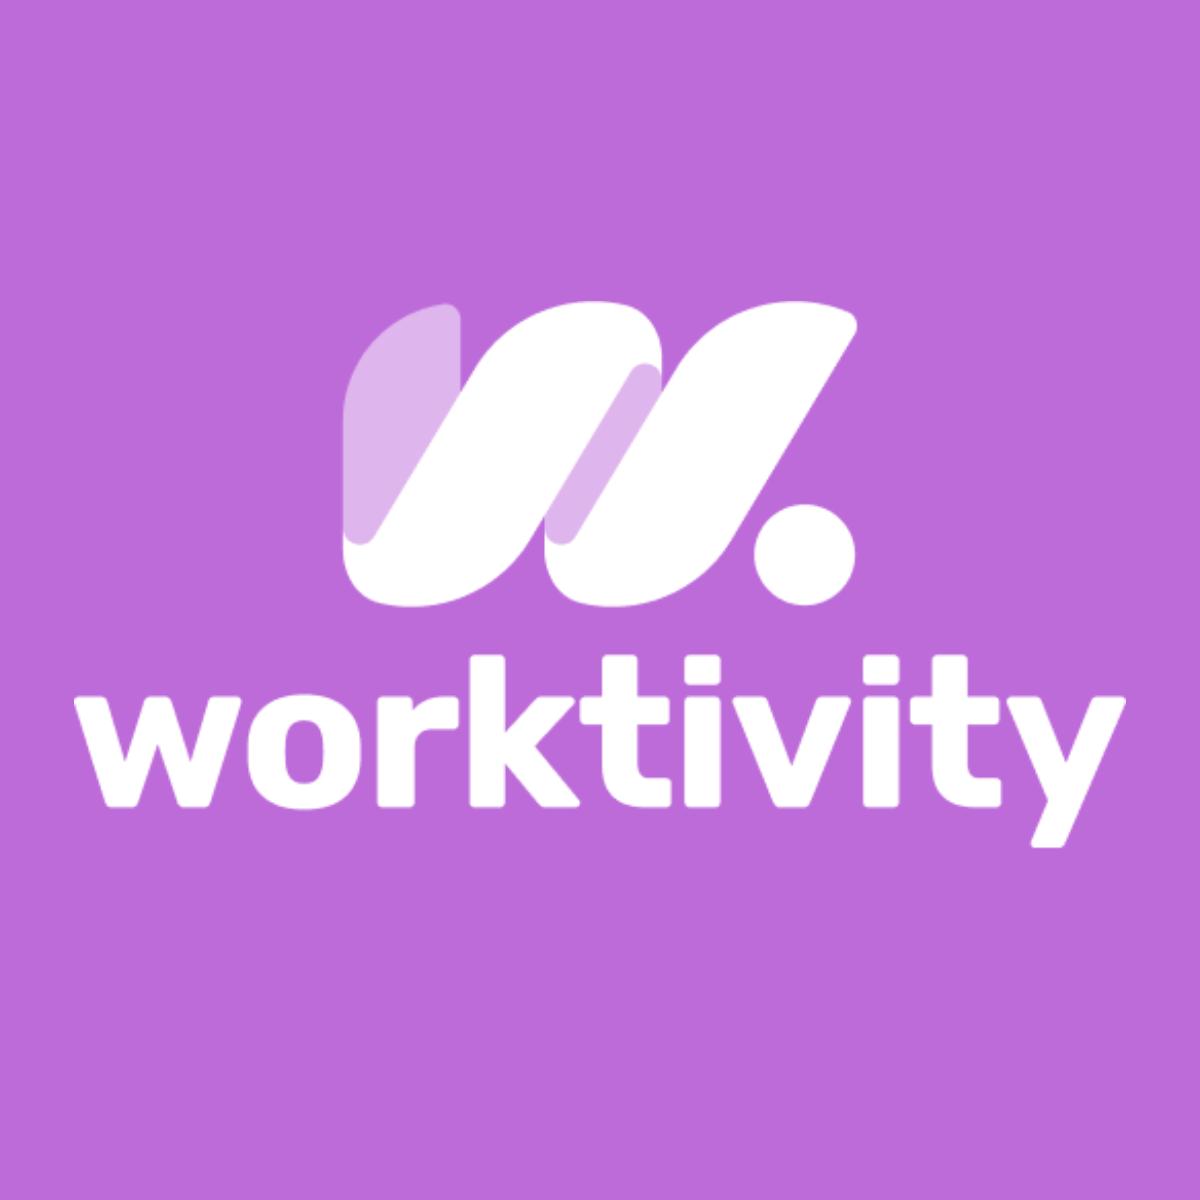 Worktivity logo